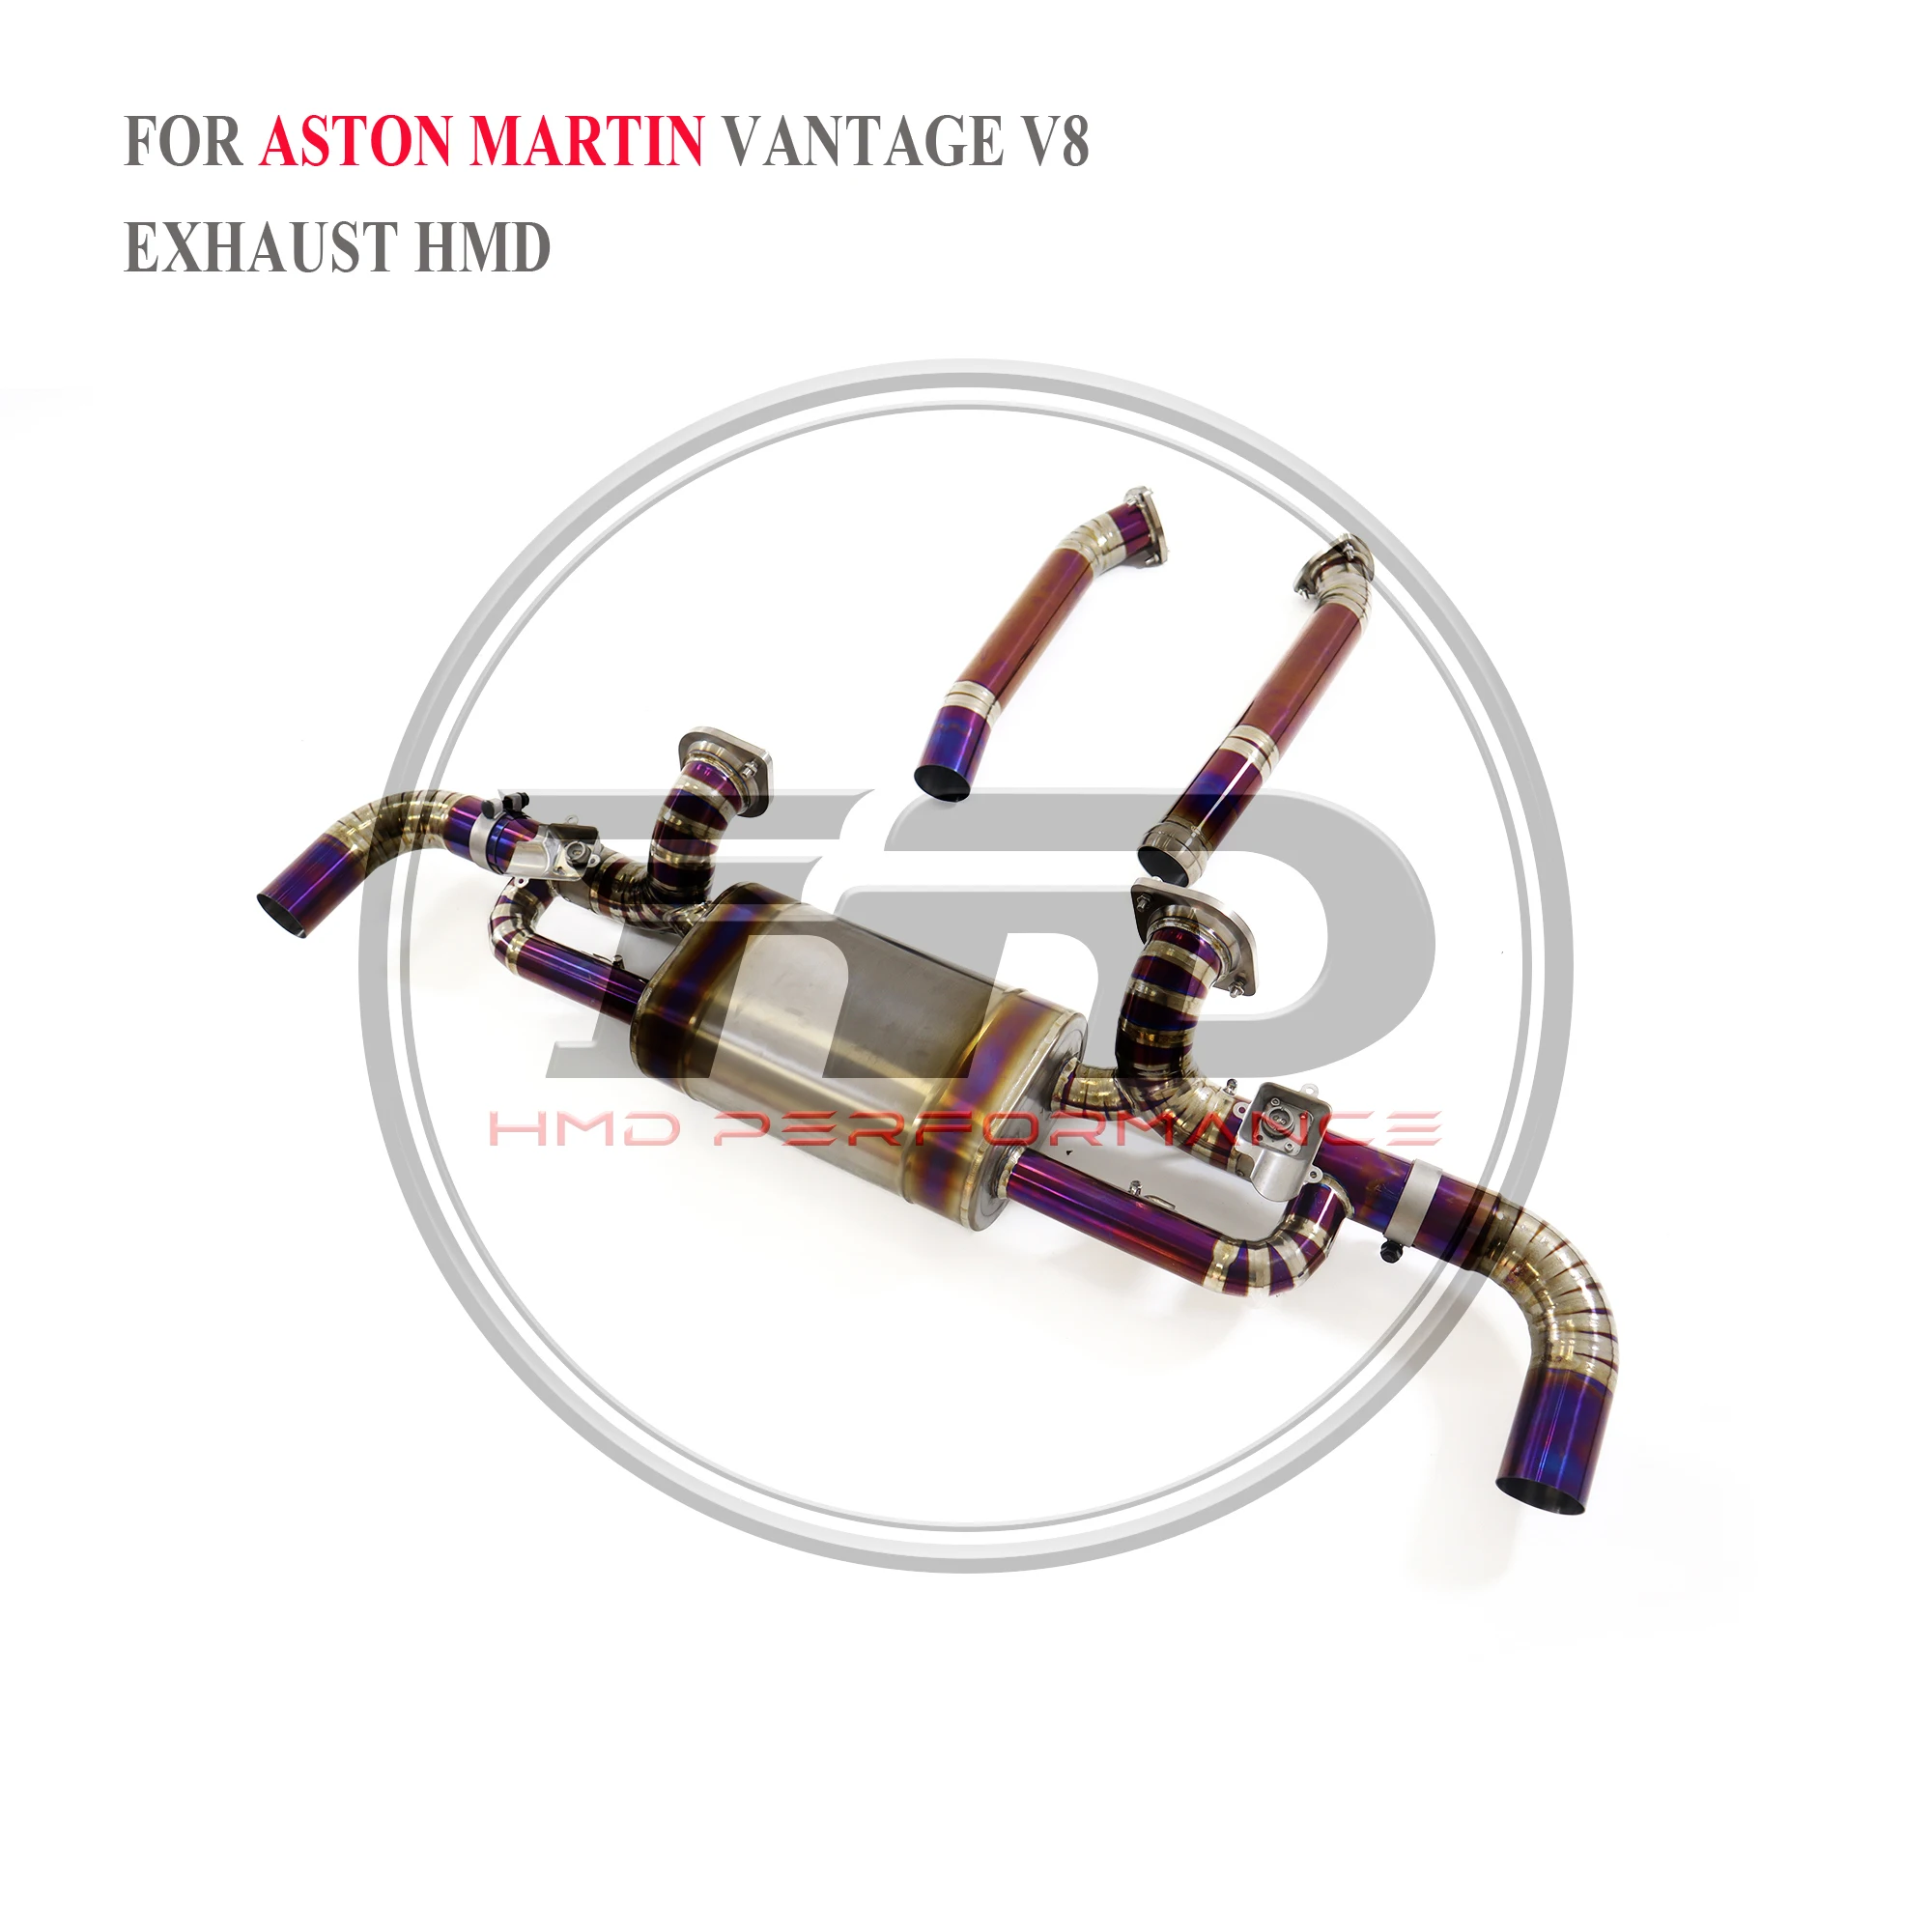 

HMD Titanium Exhaust System Performance Catback for Aston Martin Vantage V8 4.0T Muffler With OEM Valve Base